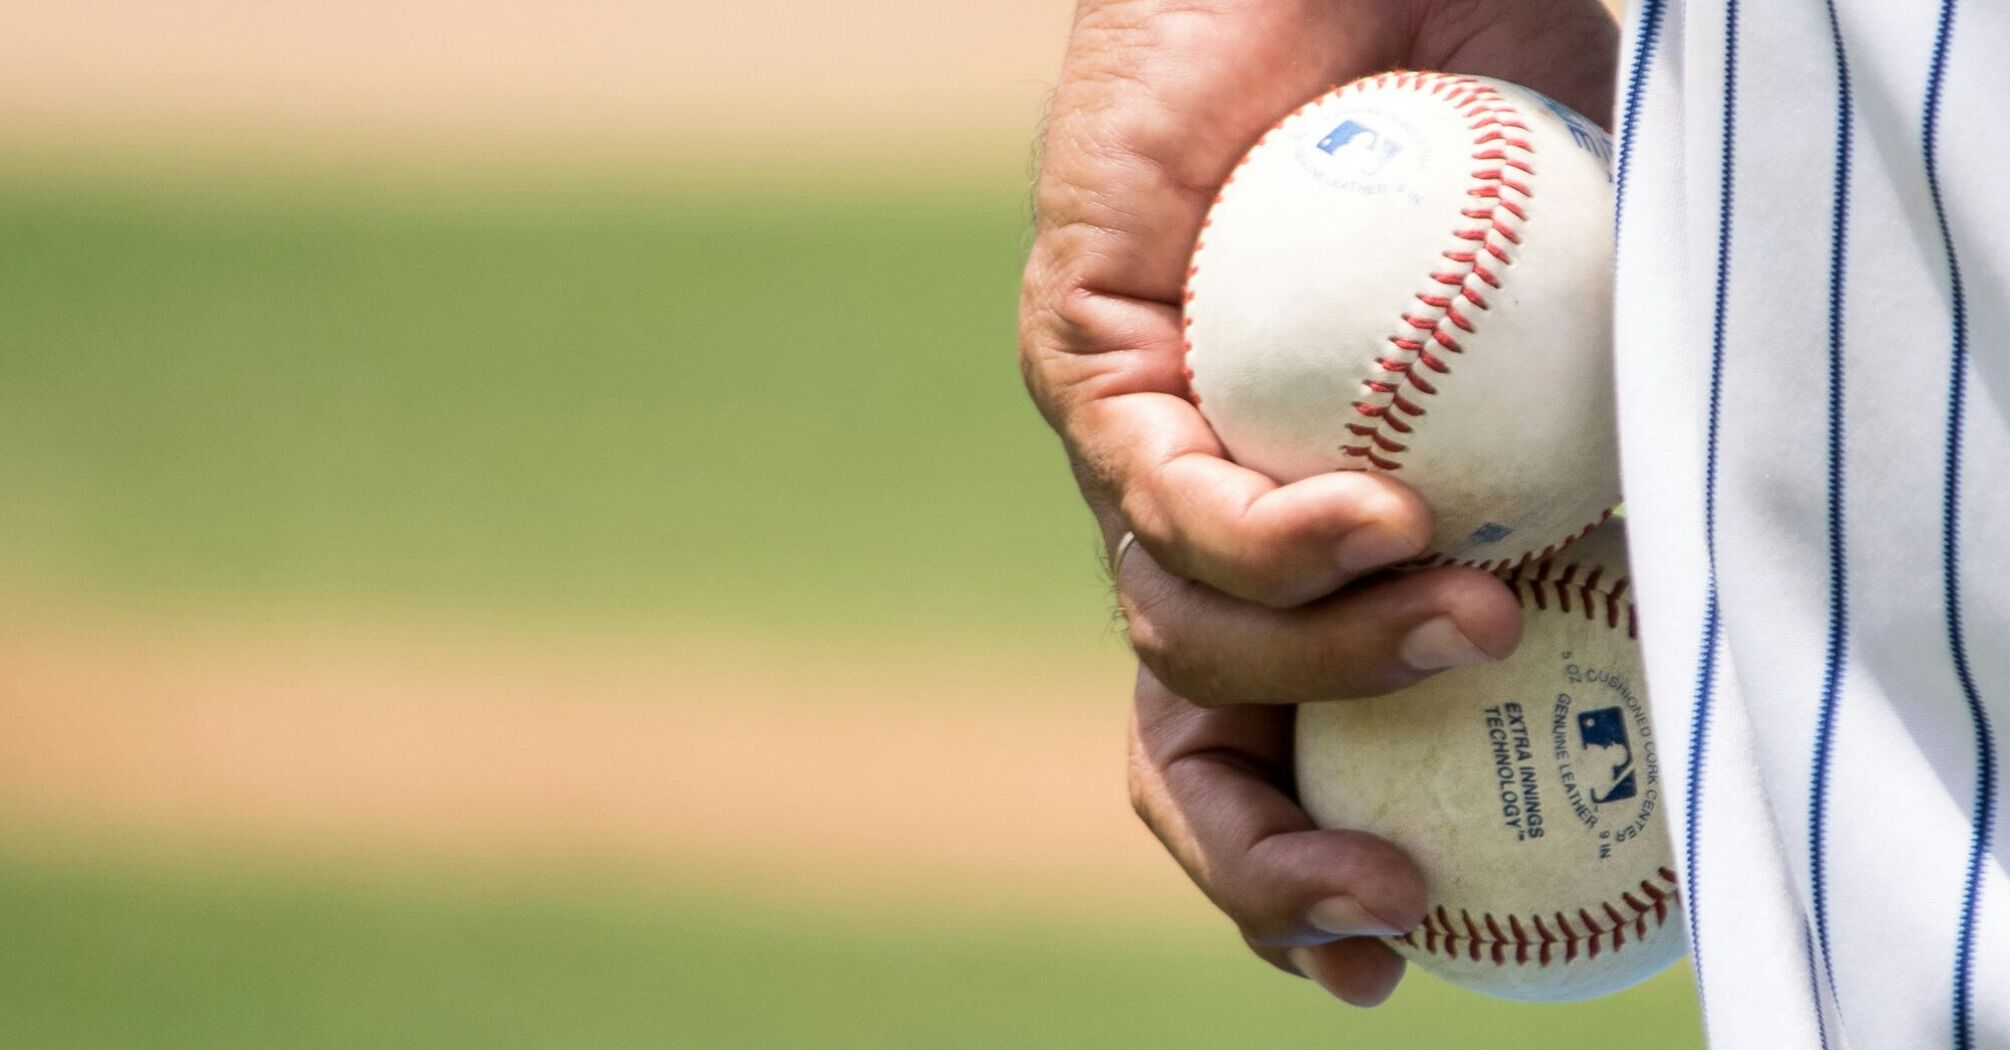 A close-up of a hand holding a baseball with the Major League Baseball logo visible 